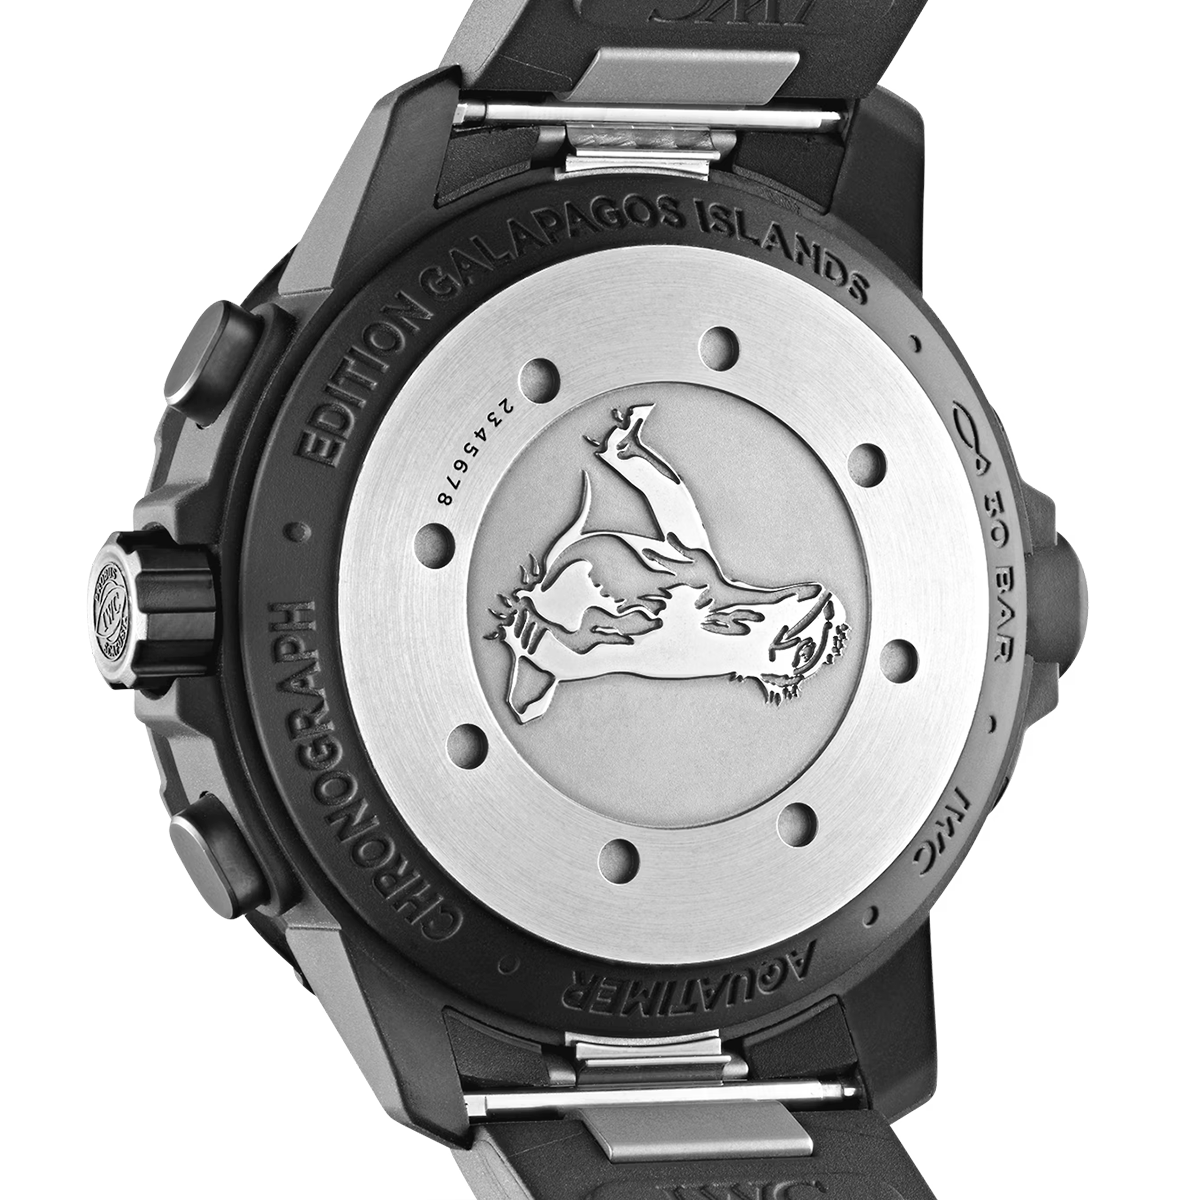 Aquatimer 45mm "Galapagos Islands" Edition Chronograph Watch